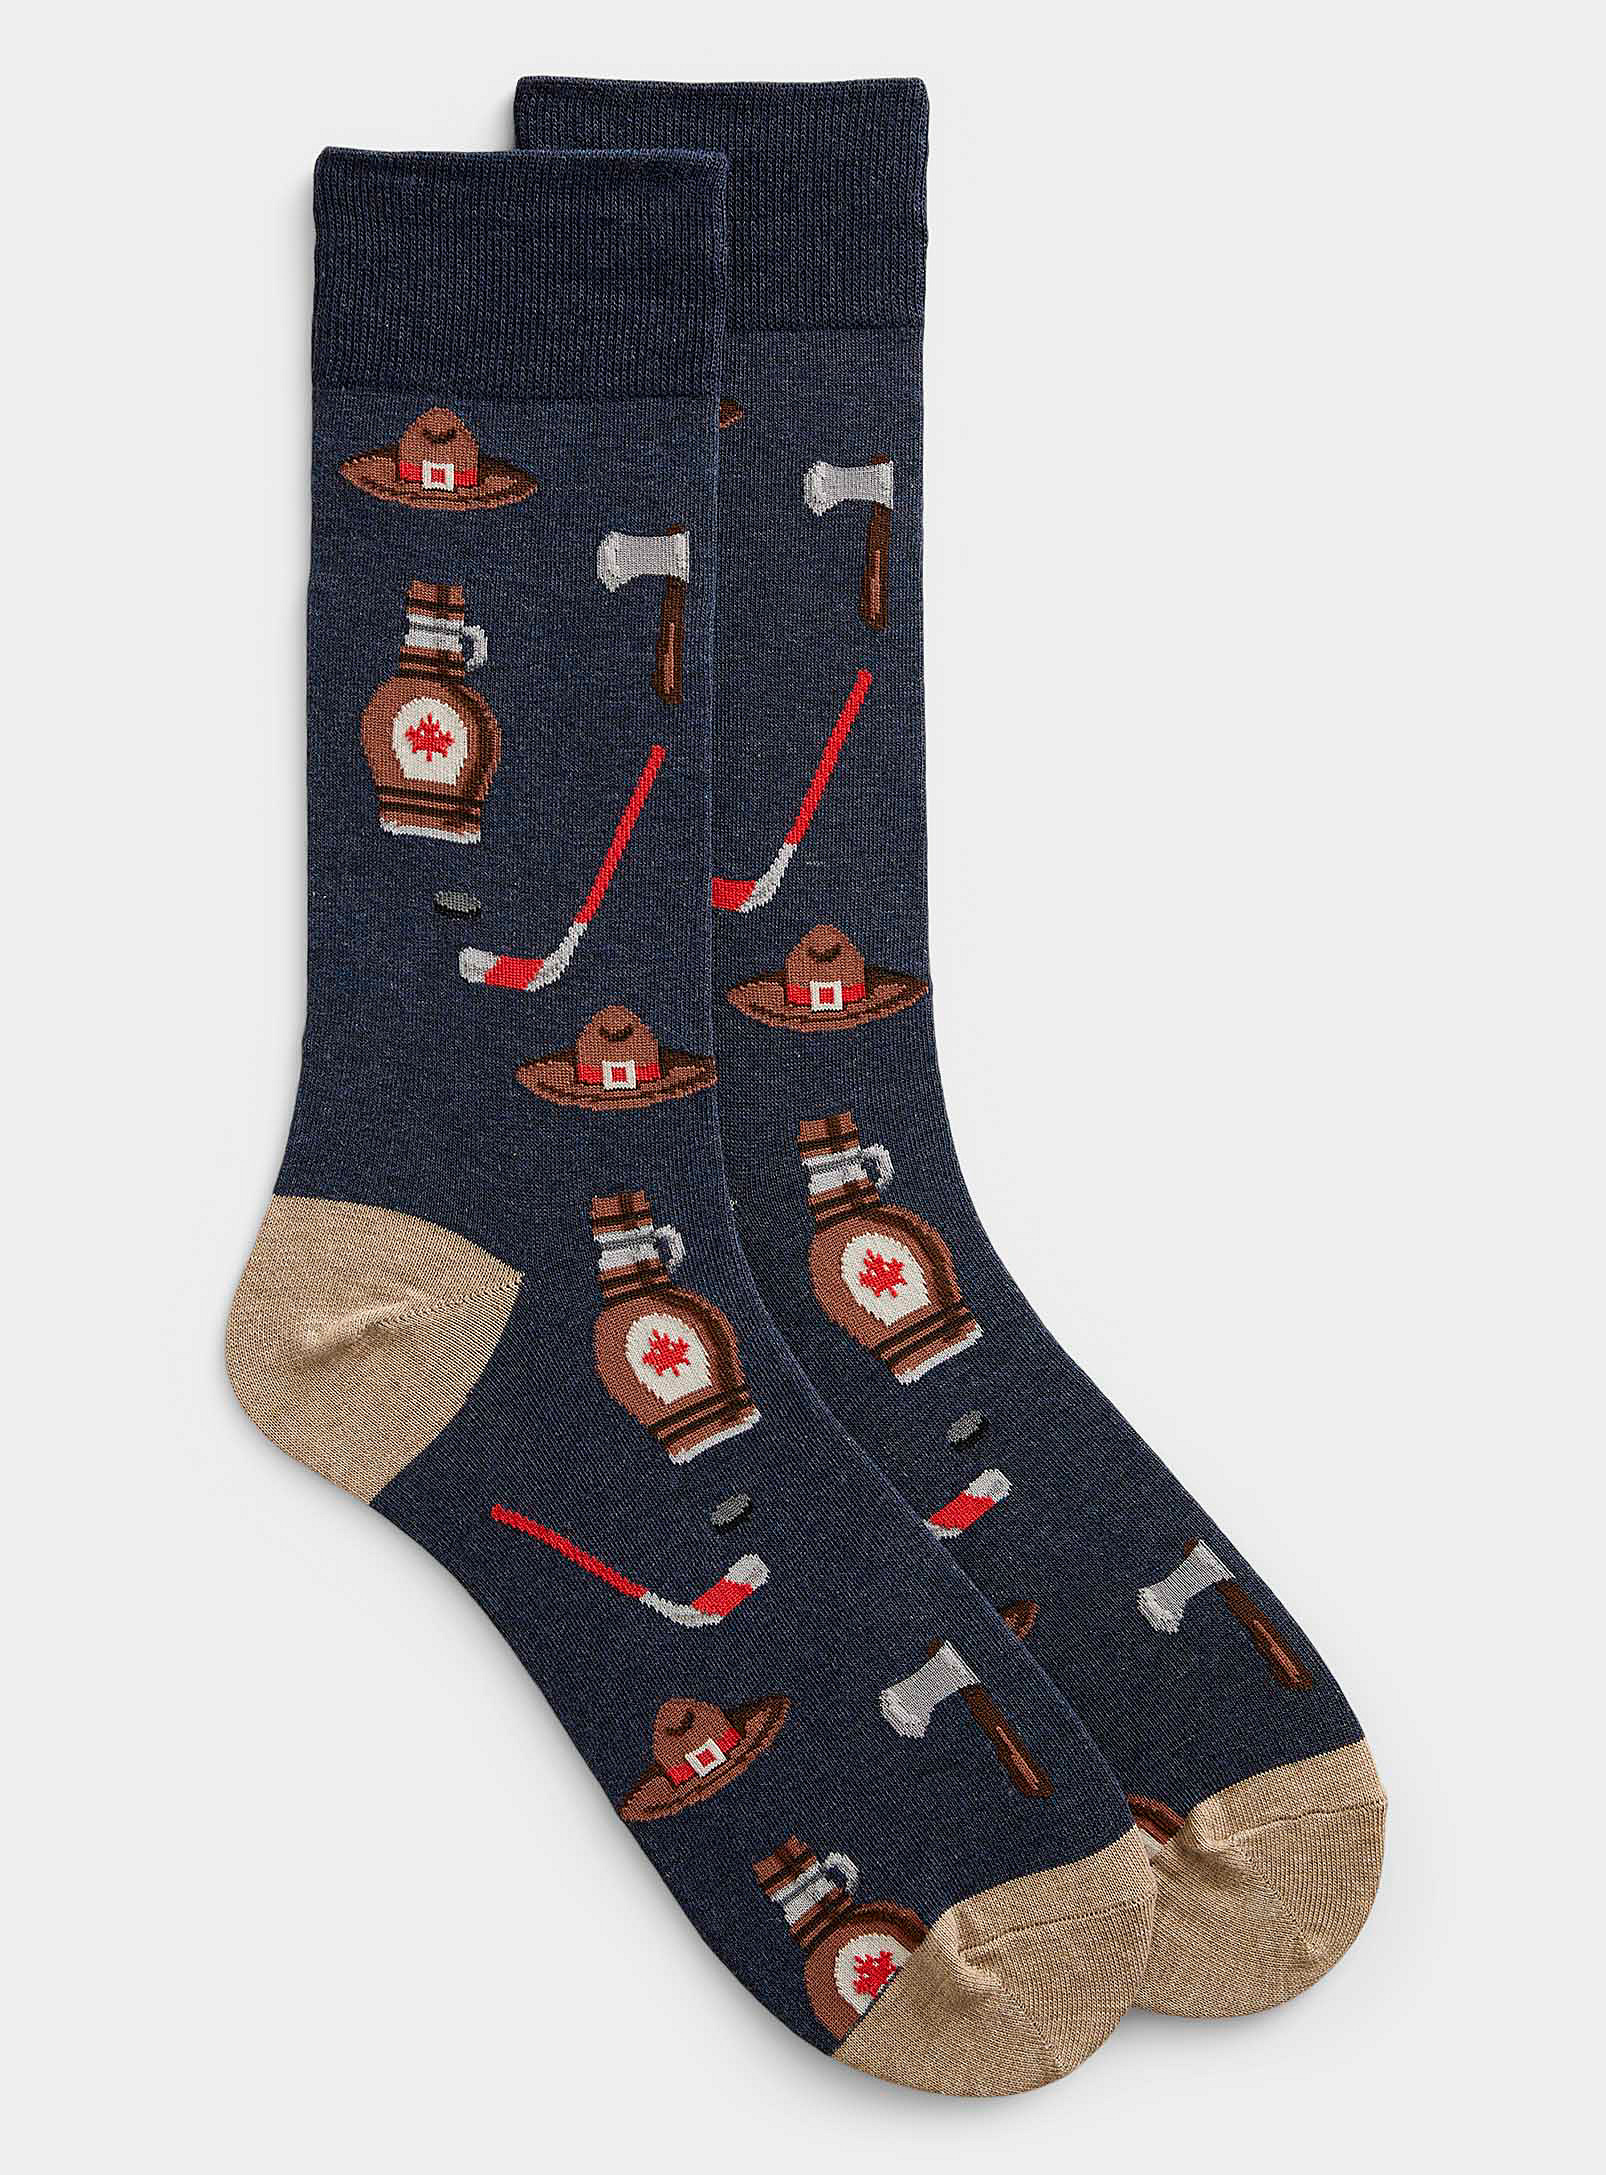 Hot Sox Canadian Emblem Sock In Slate Blue